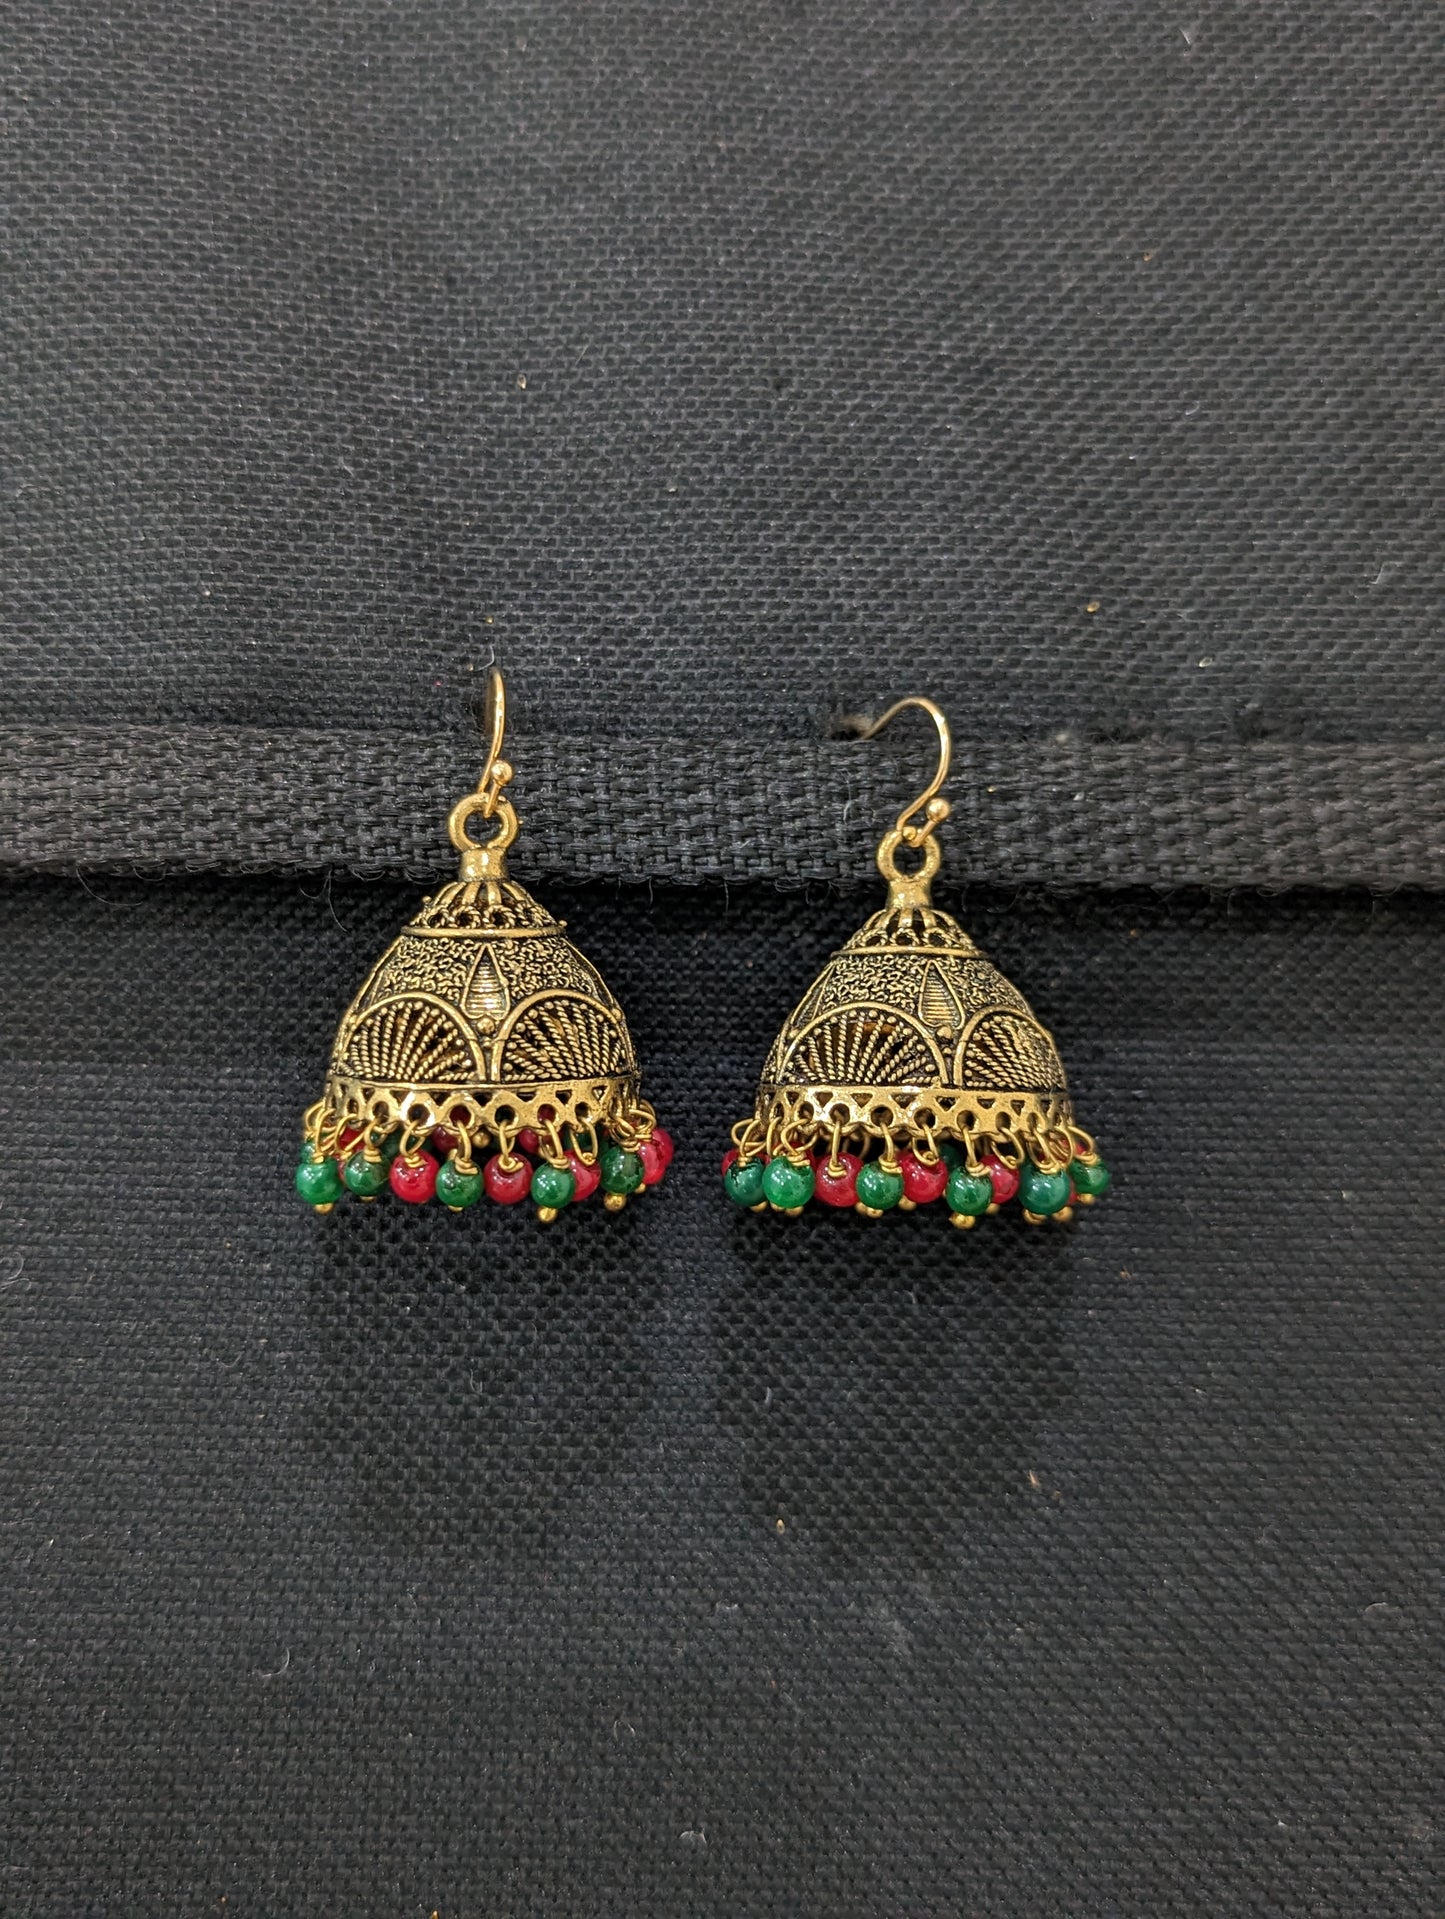 Antique gold oxidized hook drop jhumka earrings